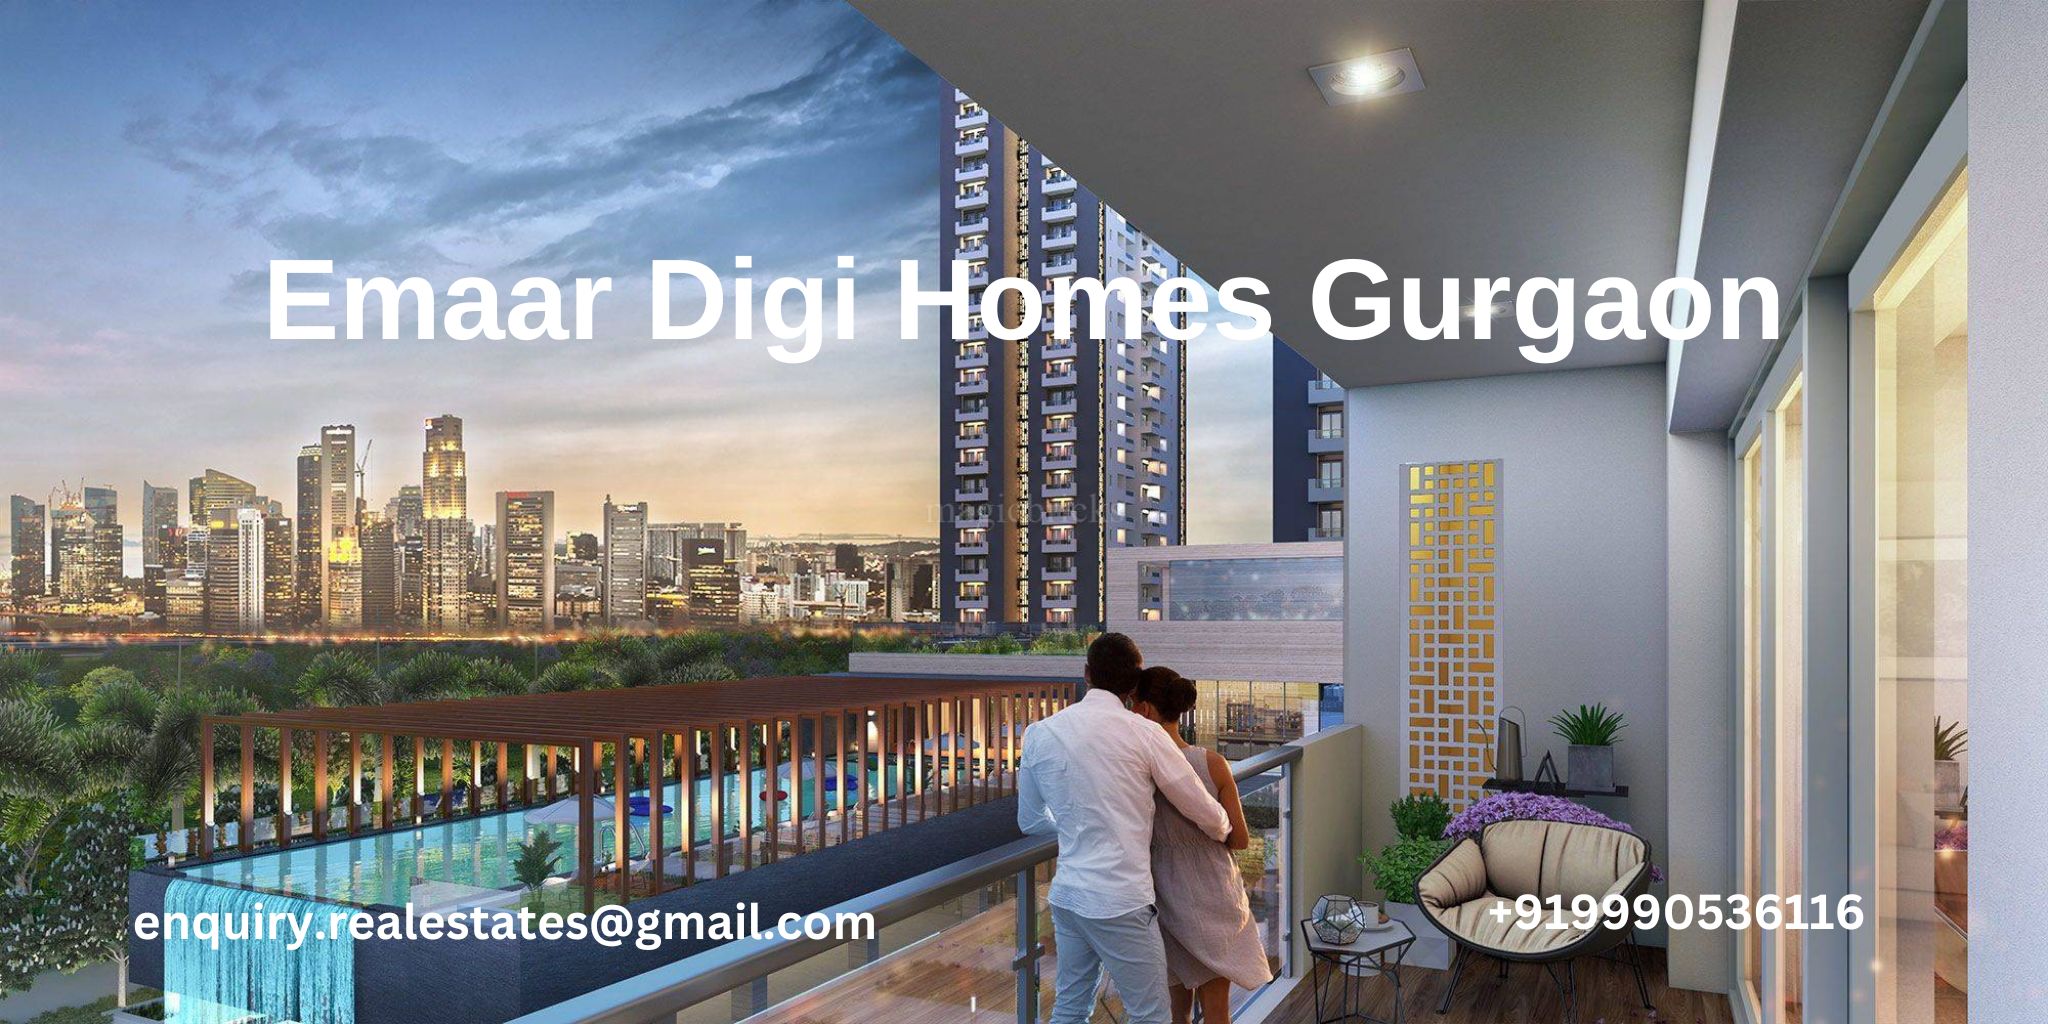 Emaar Digi Homes Gurgaon Offers a New Standard of Luxury